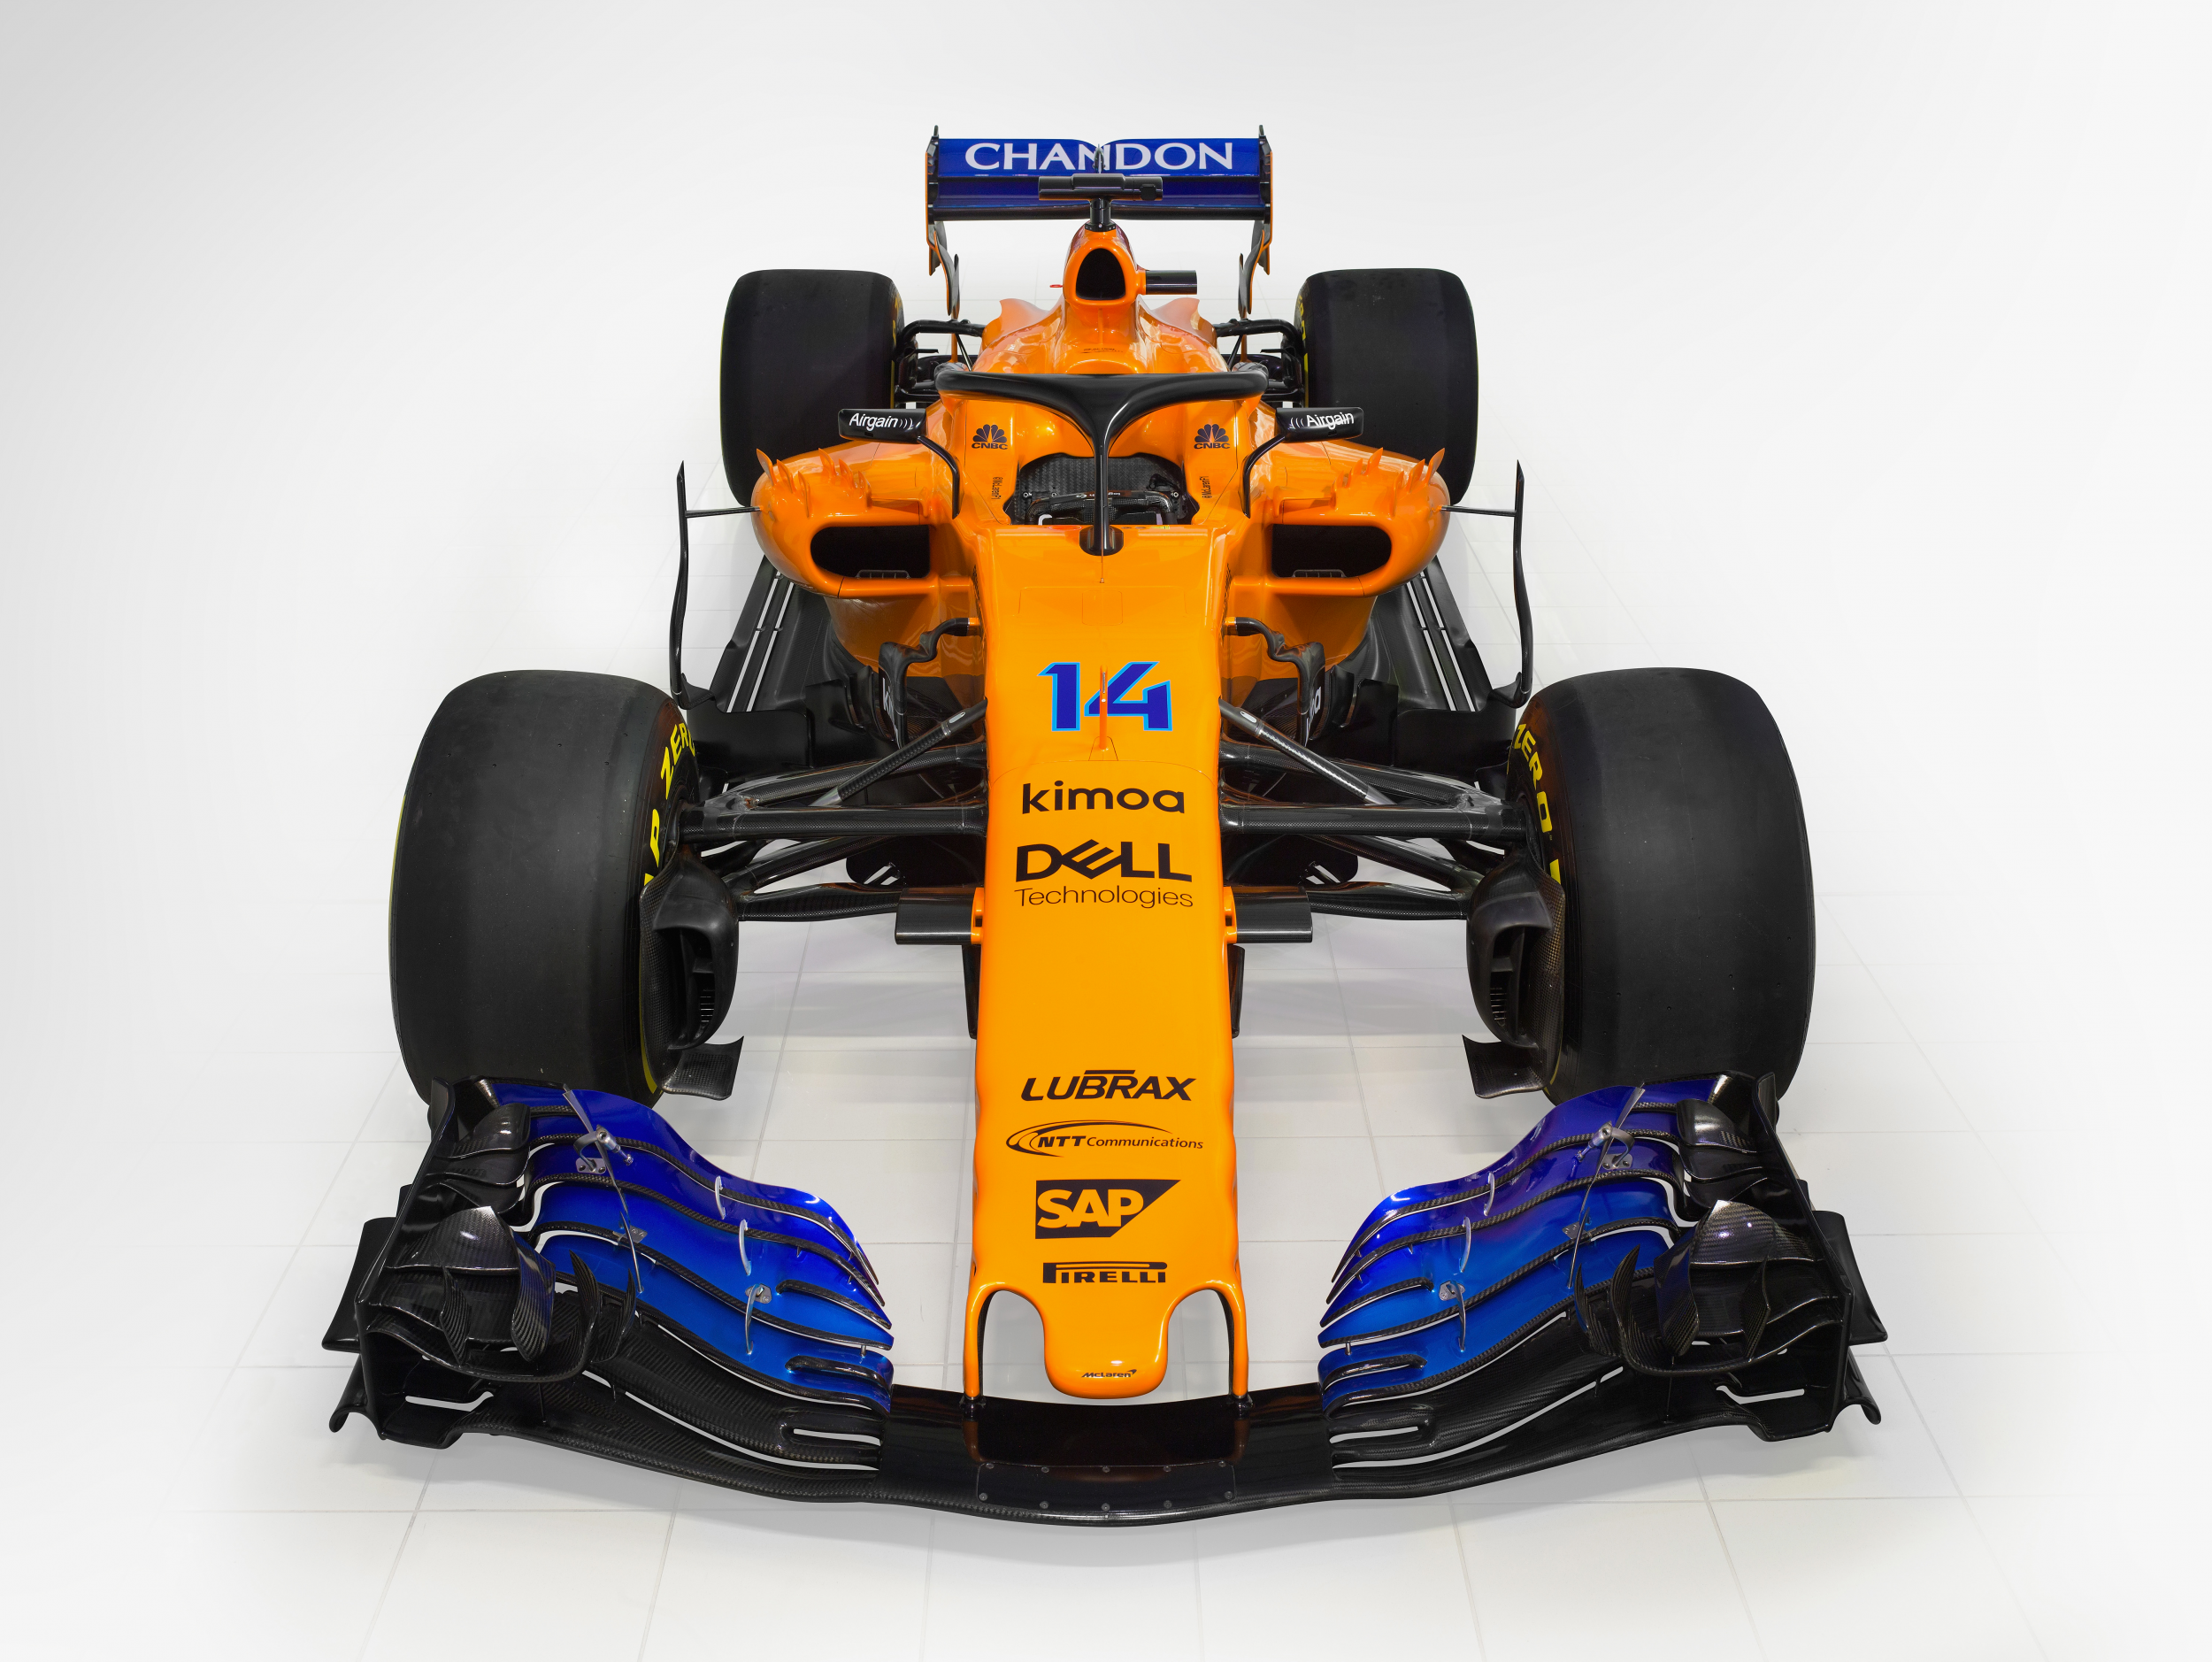 The new Renault-powered McLaren F1 car